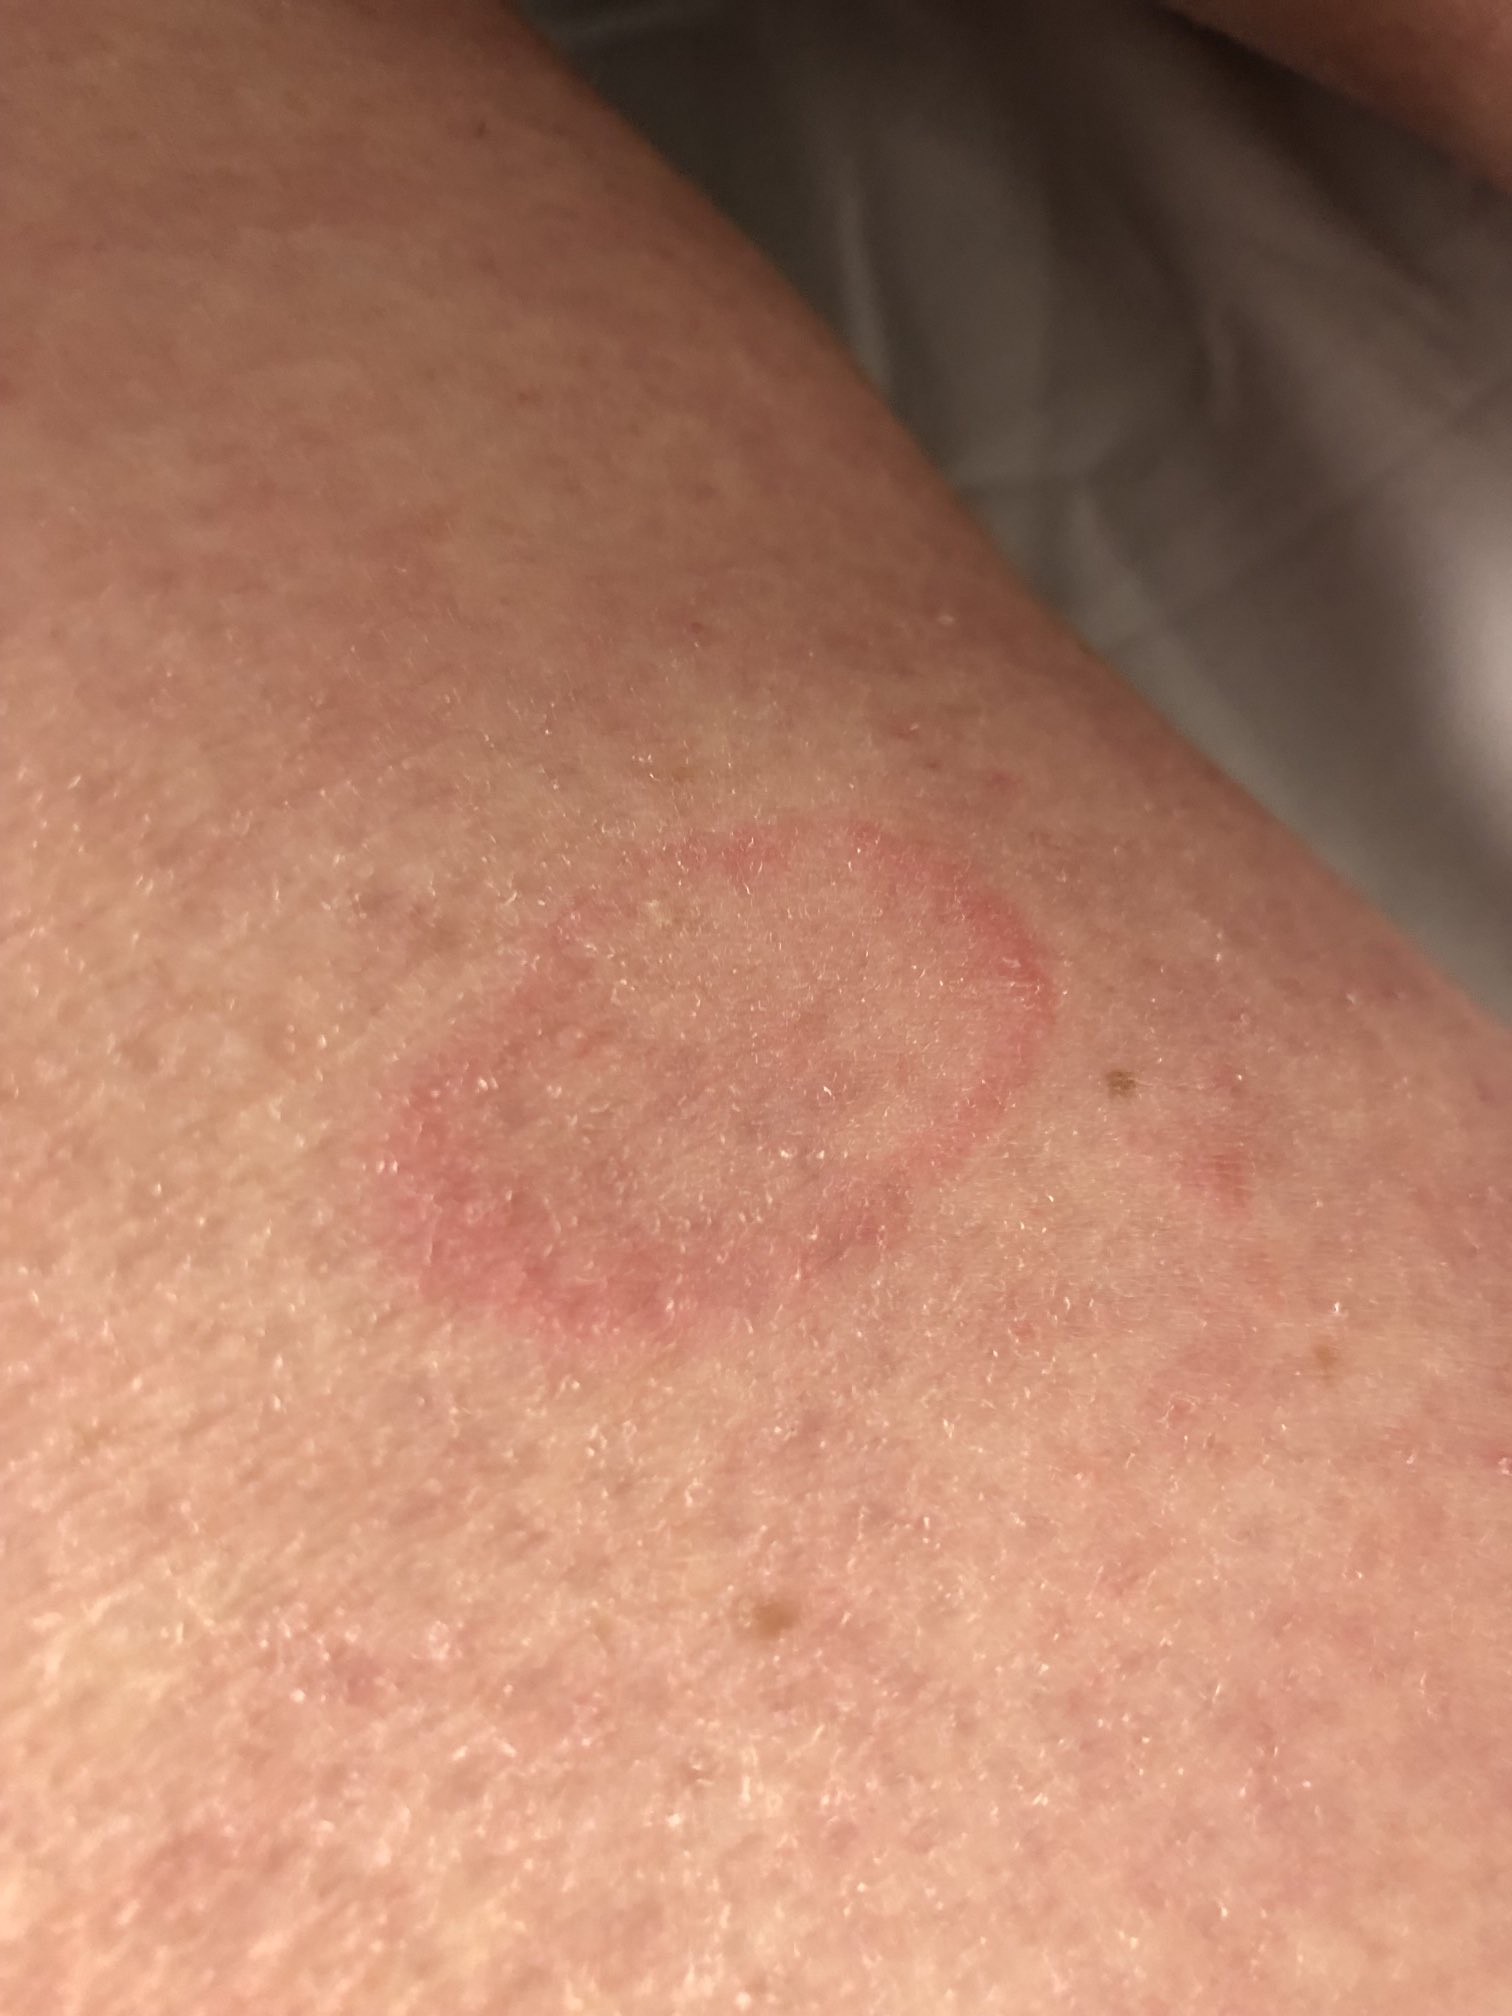 What is this small circular shaped rash? : r/Dermatology